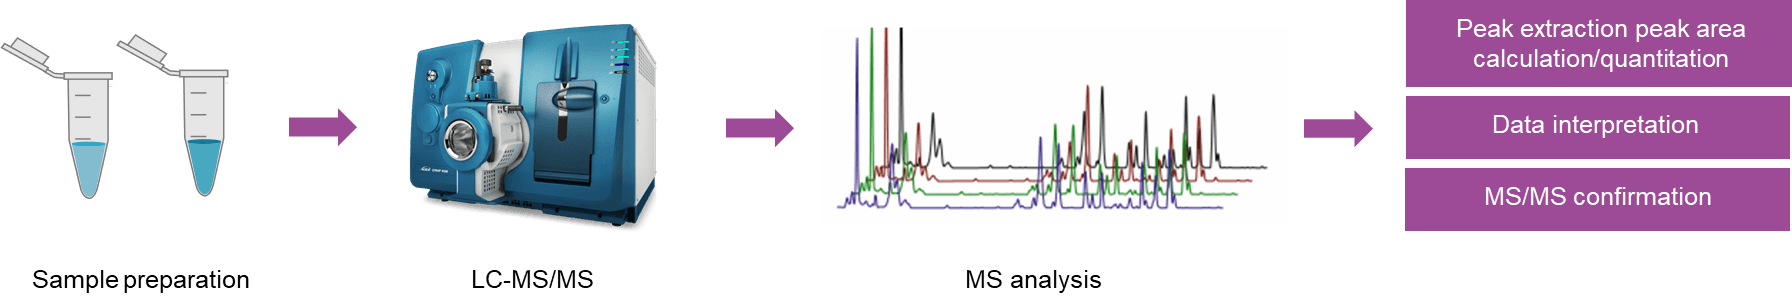 Fig 2. The workflow of target metabolomics analysis